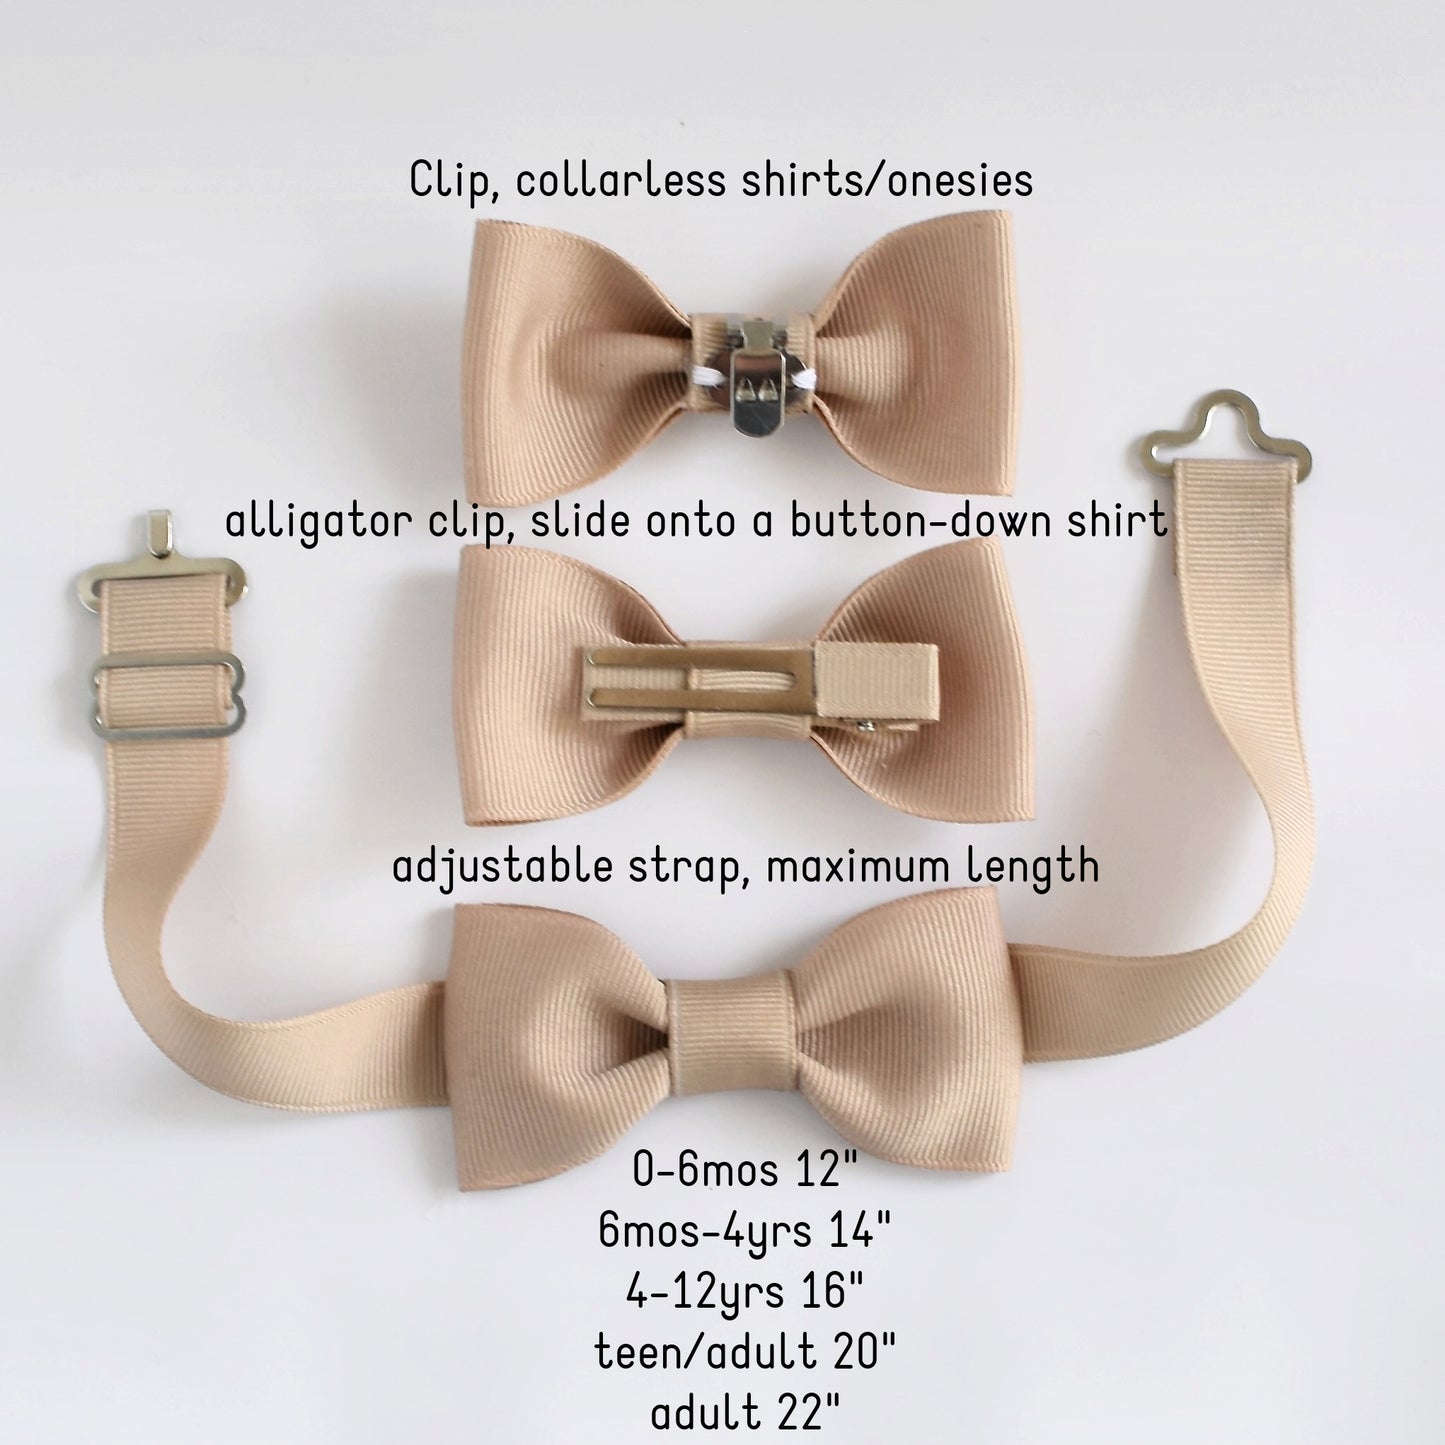 clip or adjustable strap